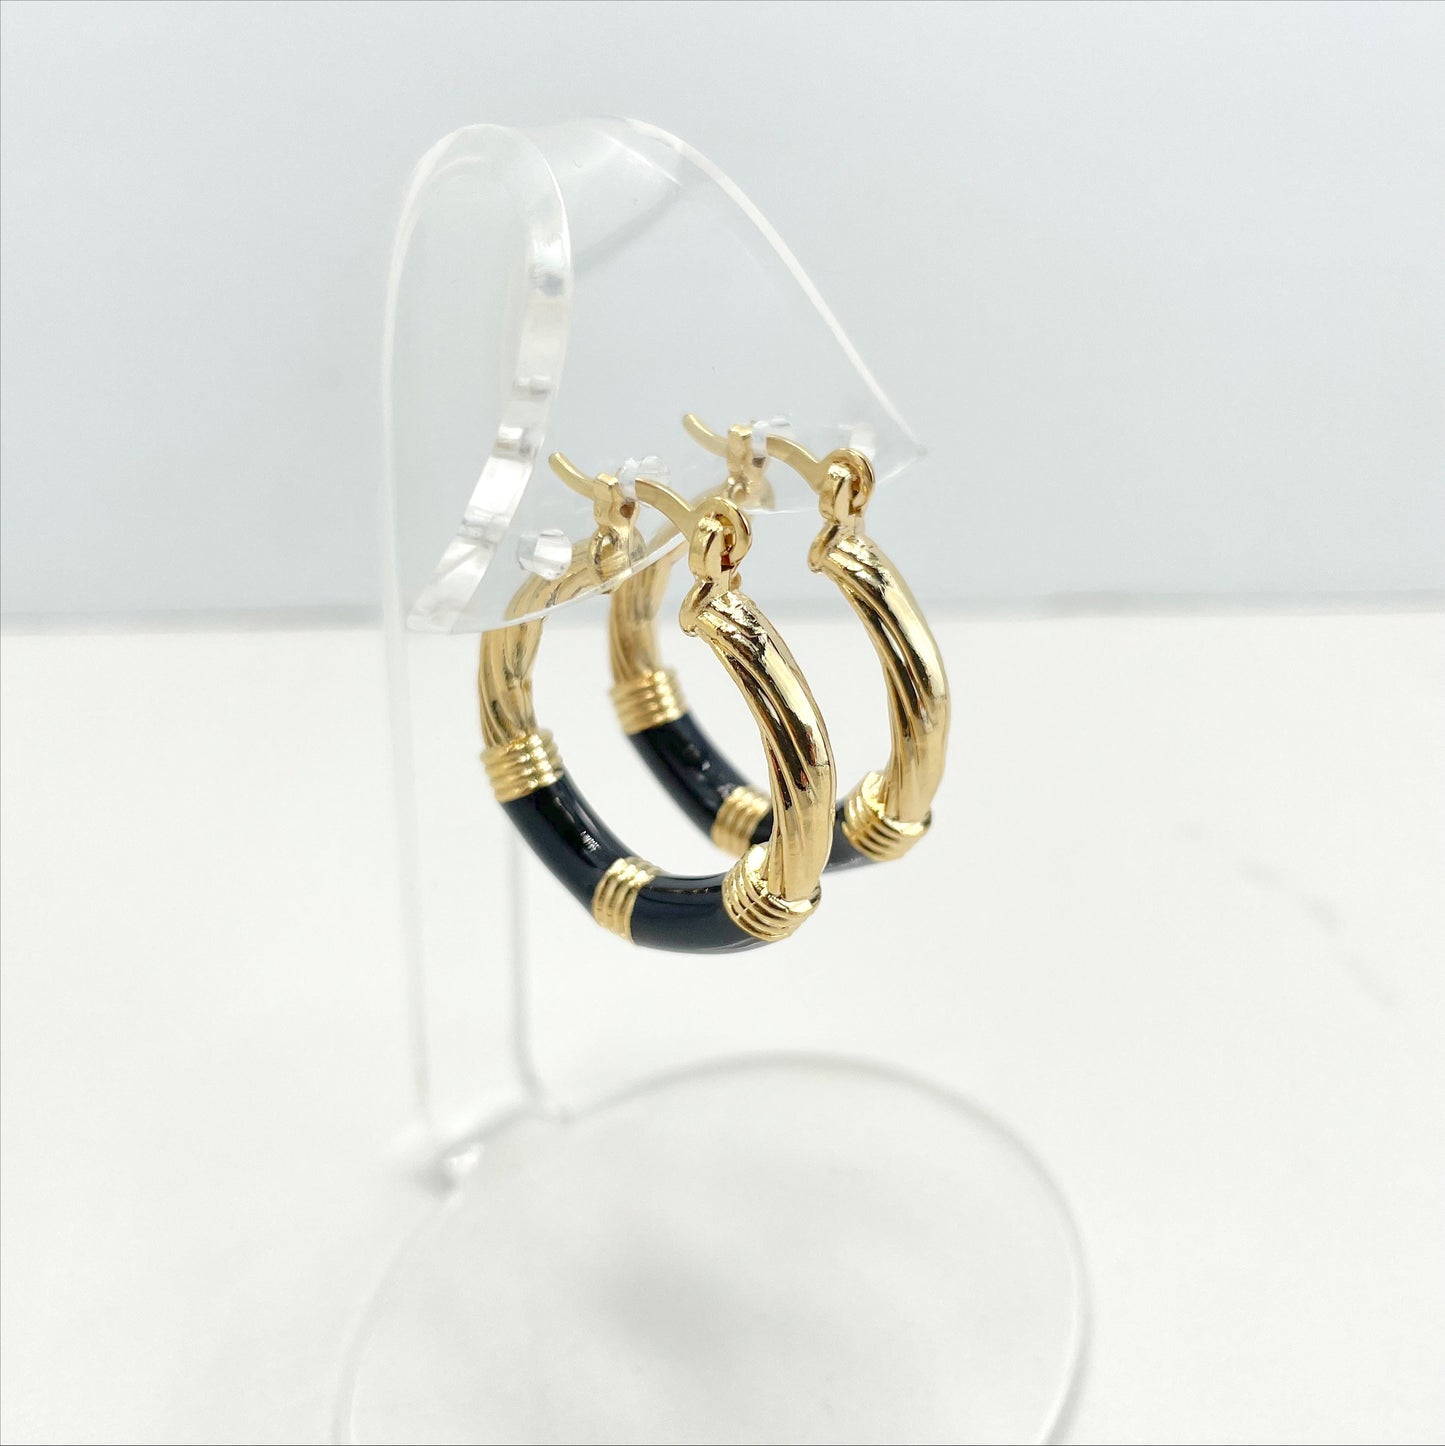 18k Gold Filled 27mm Enamel Black Twisted Hoop Earrings Wholesale Jewelry Making Supplies